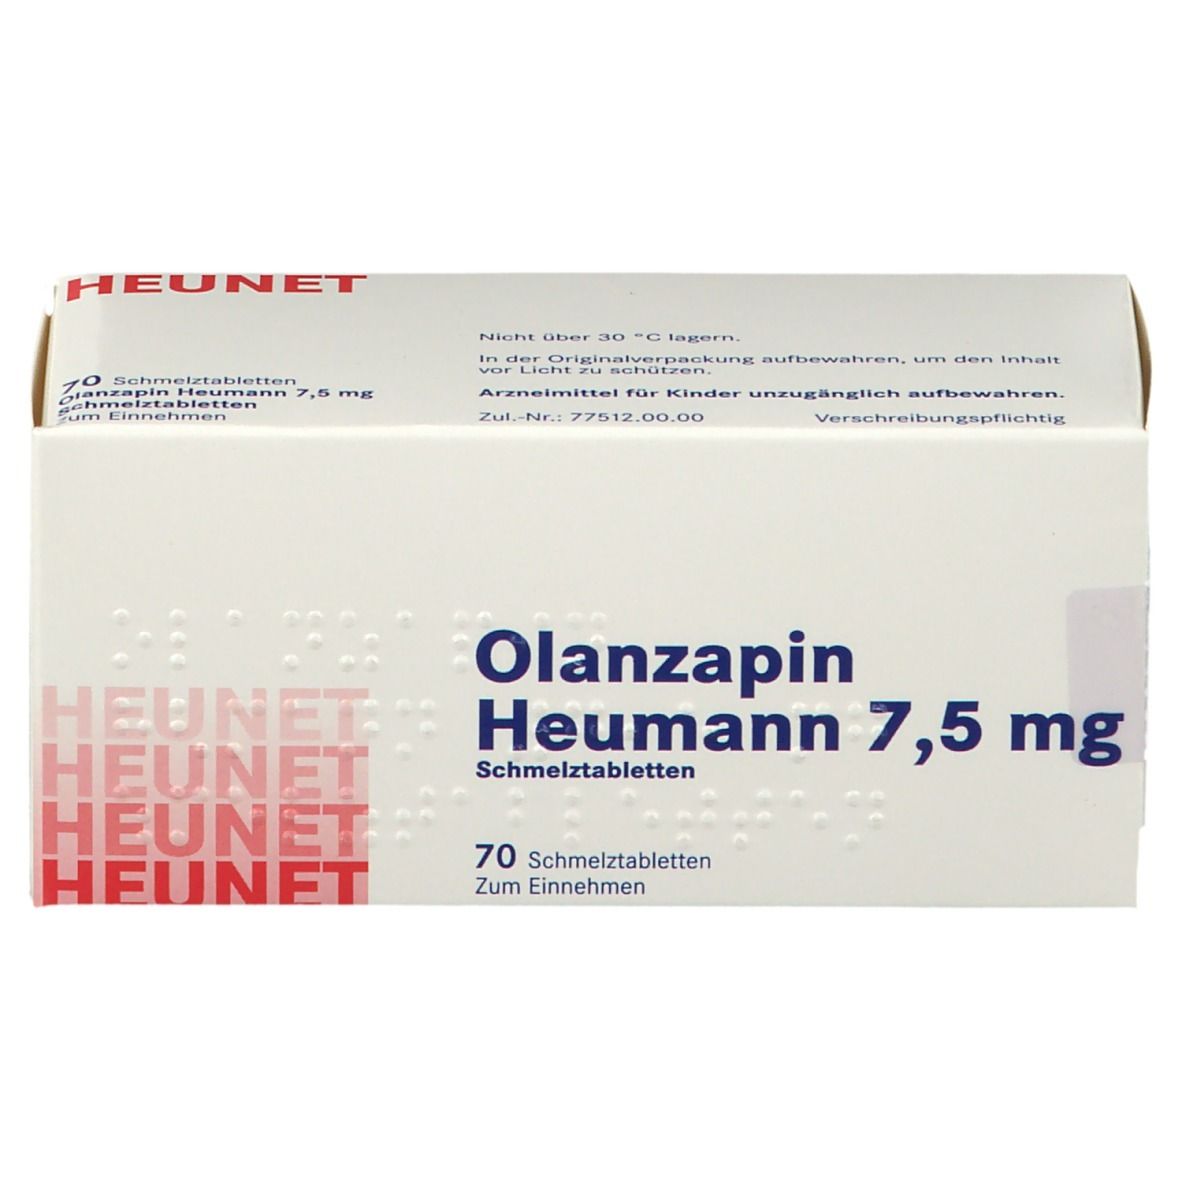 Olanzapin Heumann 7,5 mg